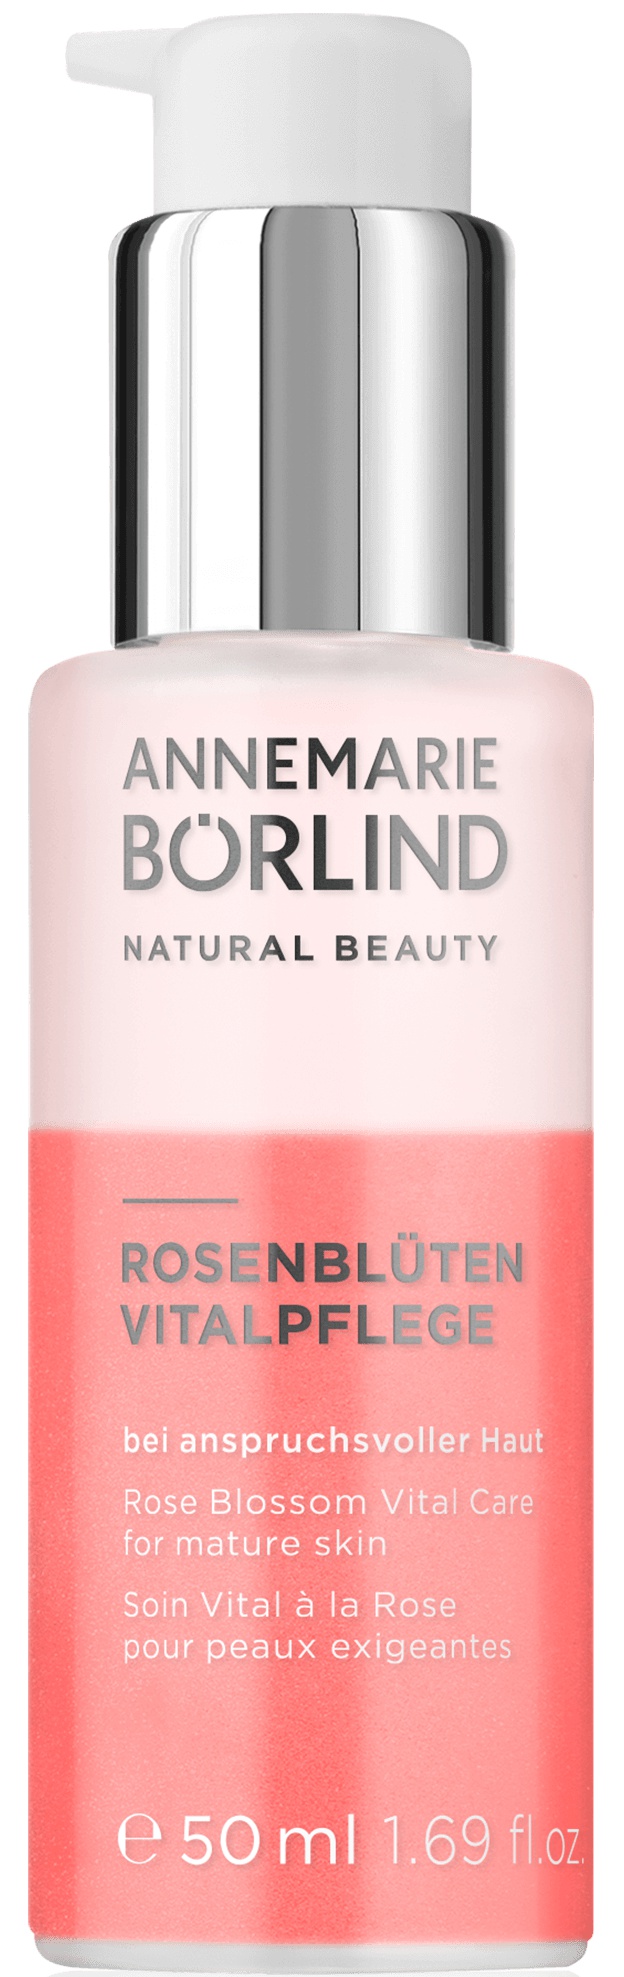 Annemarie Börlind Rose Blossom Vital Care